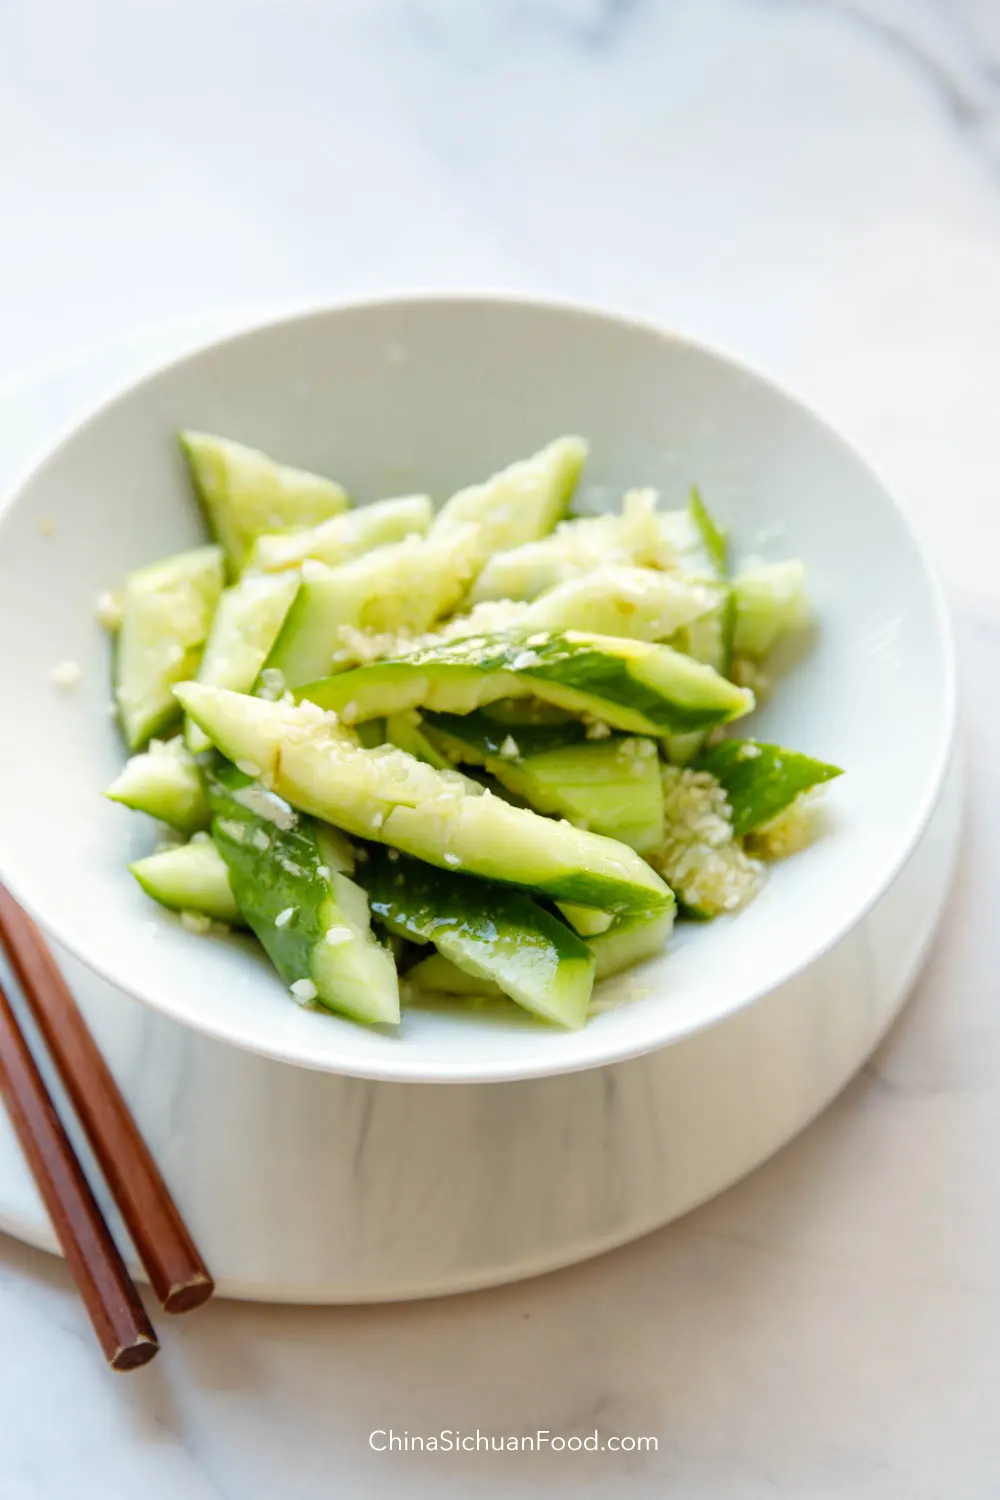 Chinese cucumber salad|chinasichuanfood.com